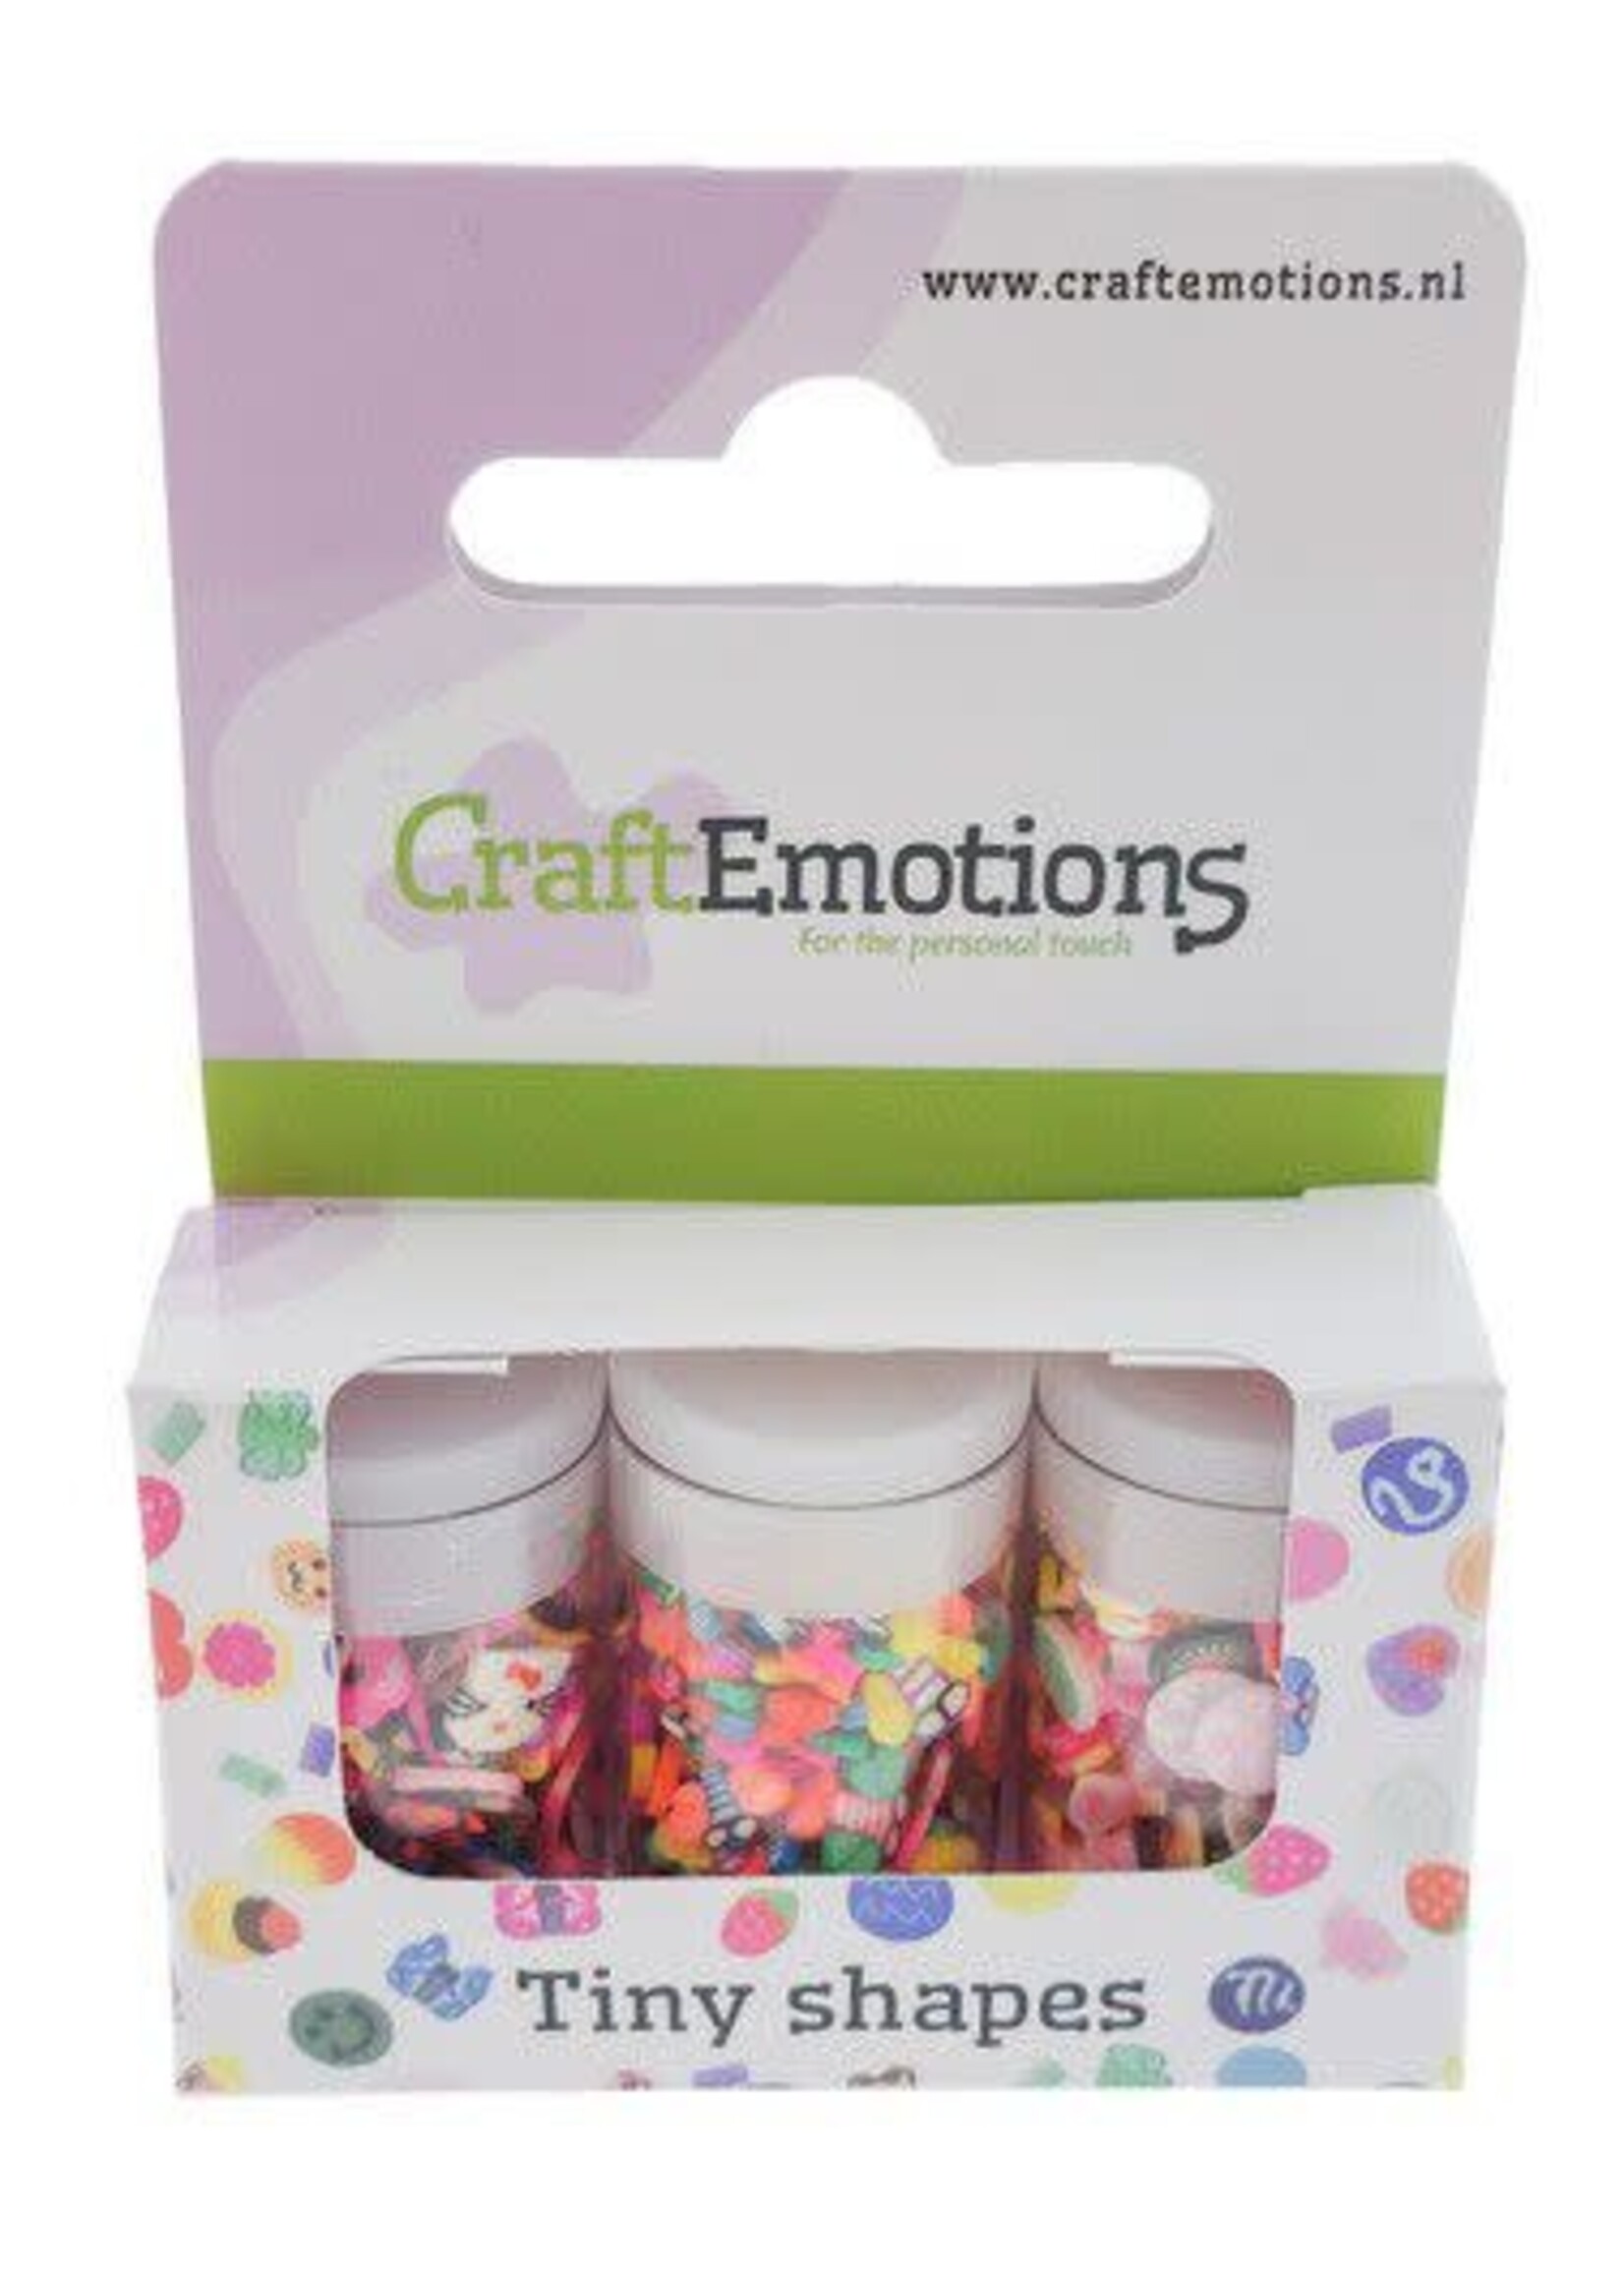 Craft Emotions CraftEmotions Tiny Shapes - 3 tubes - various shapes 3 (04-23) Artikelnummer 470003/0013